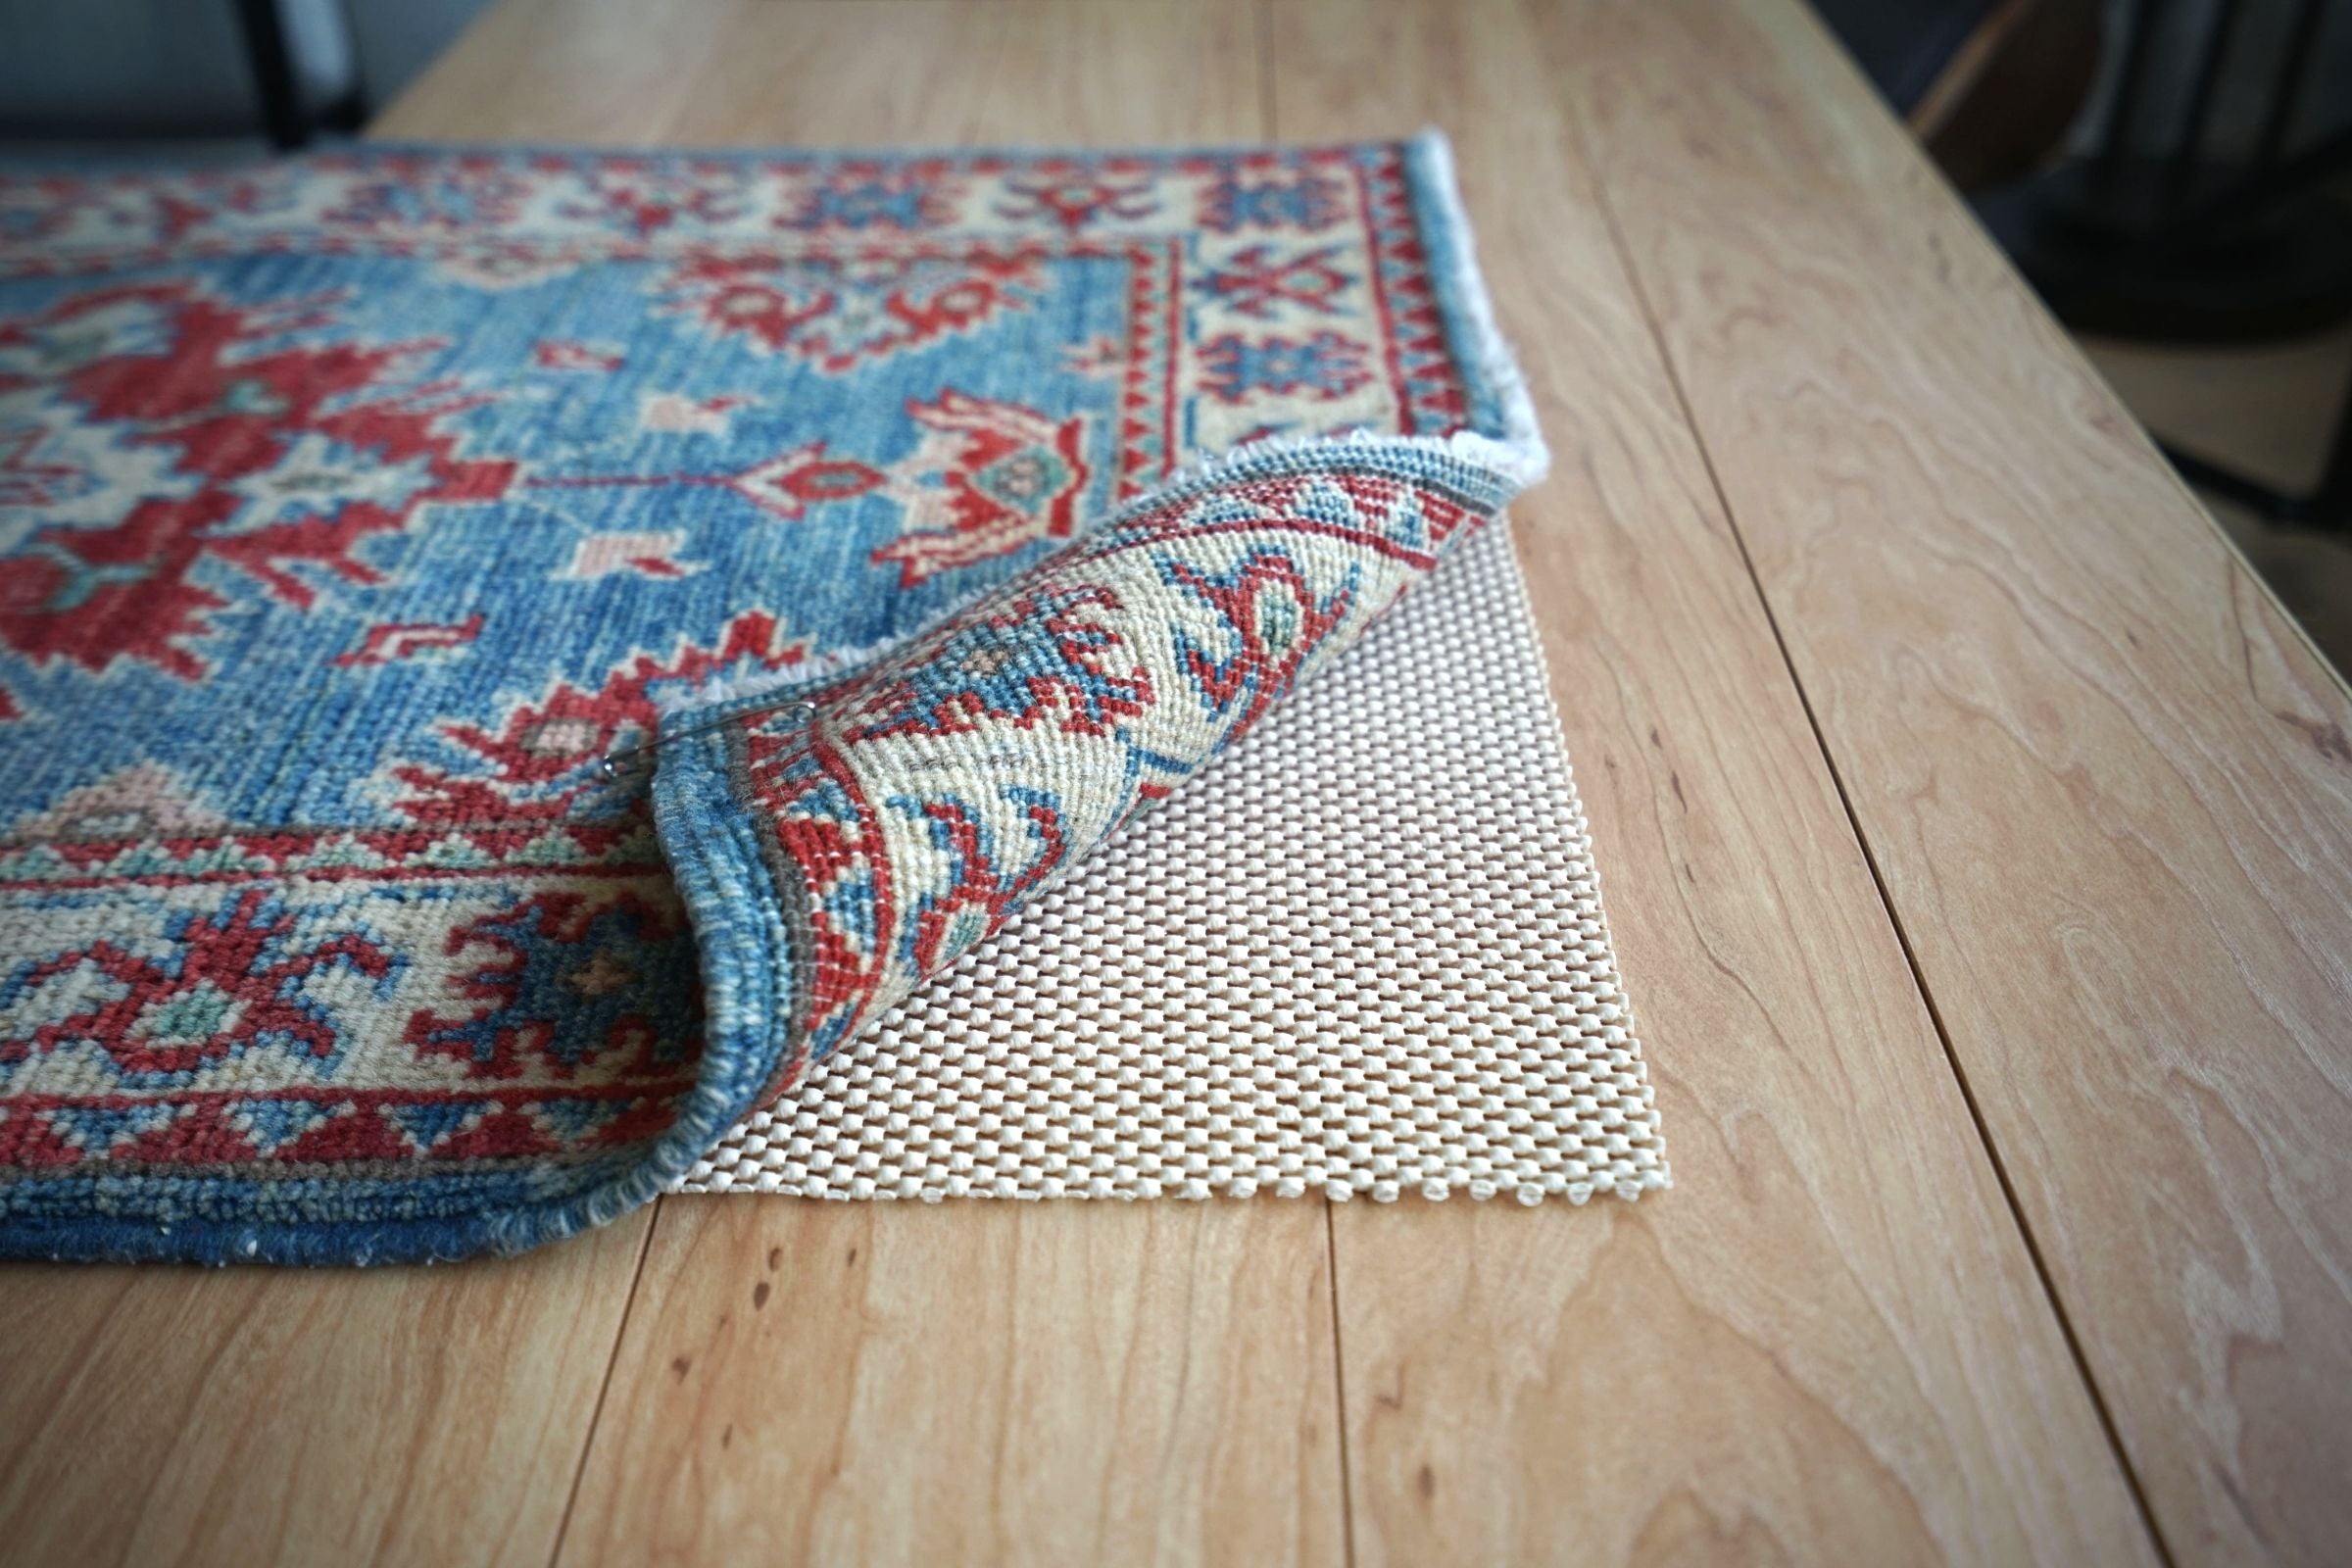 natural rubber rug pad